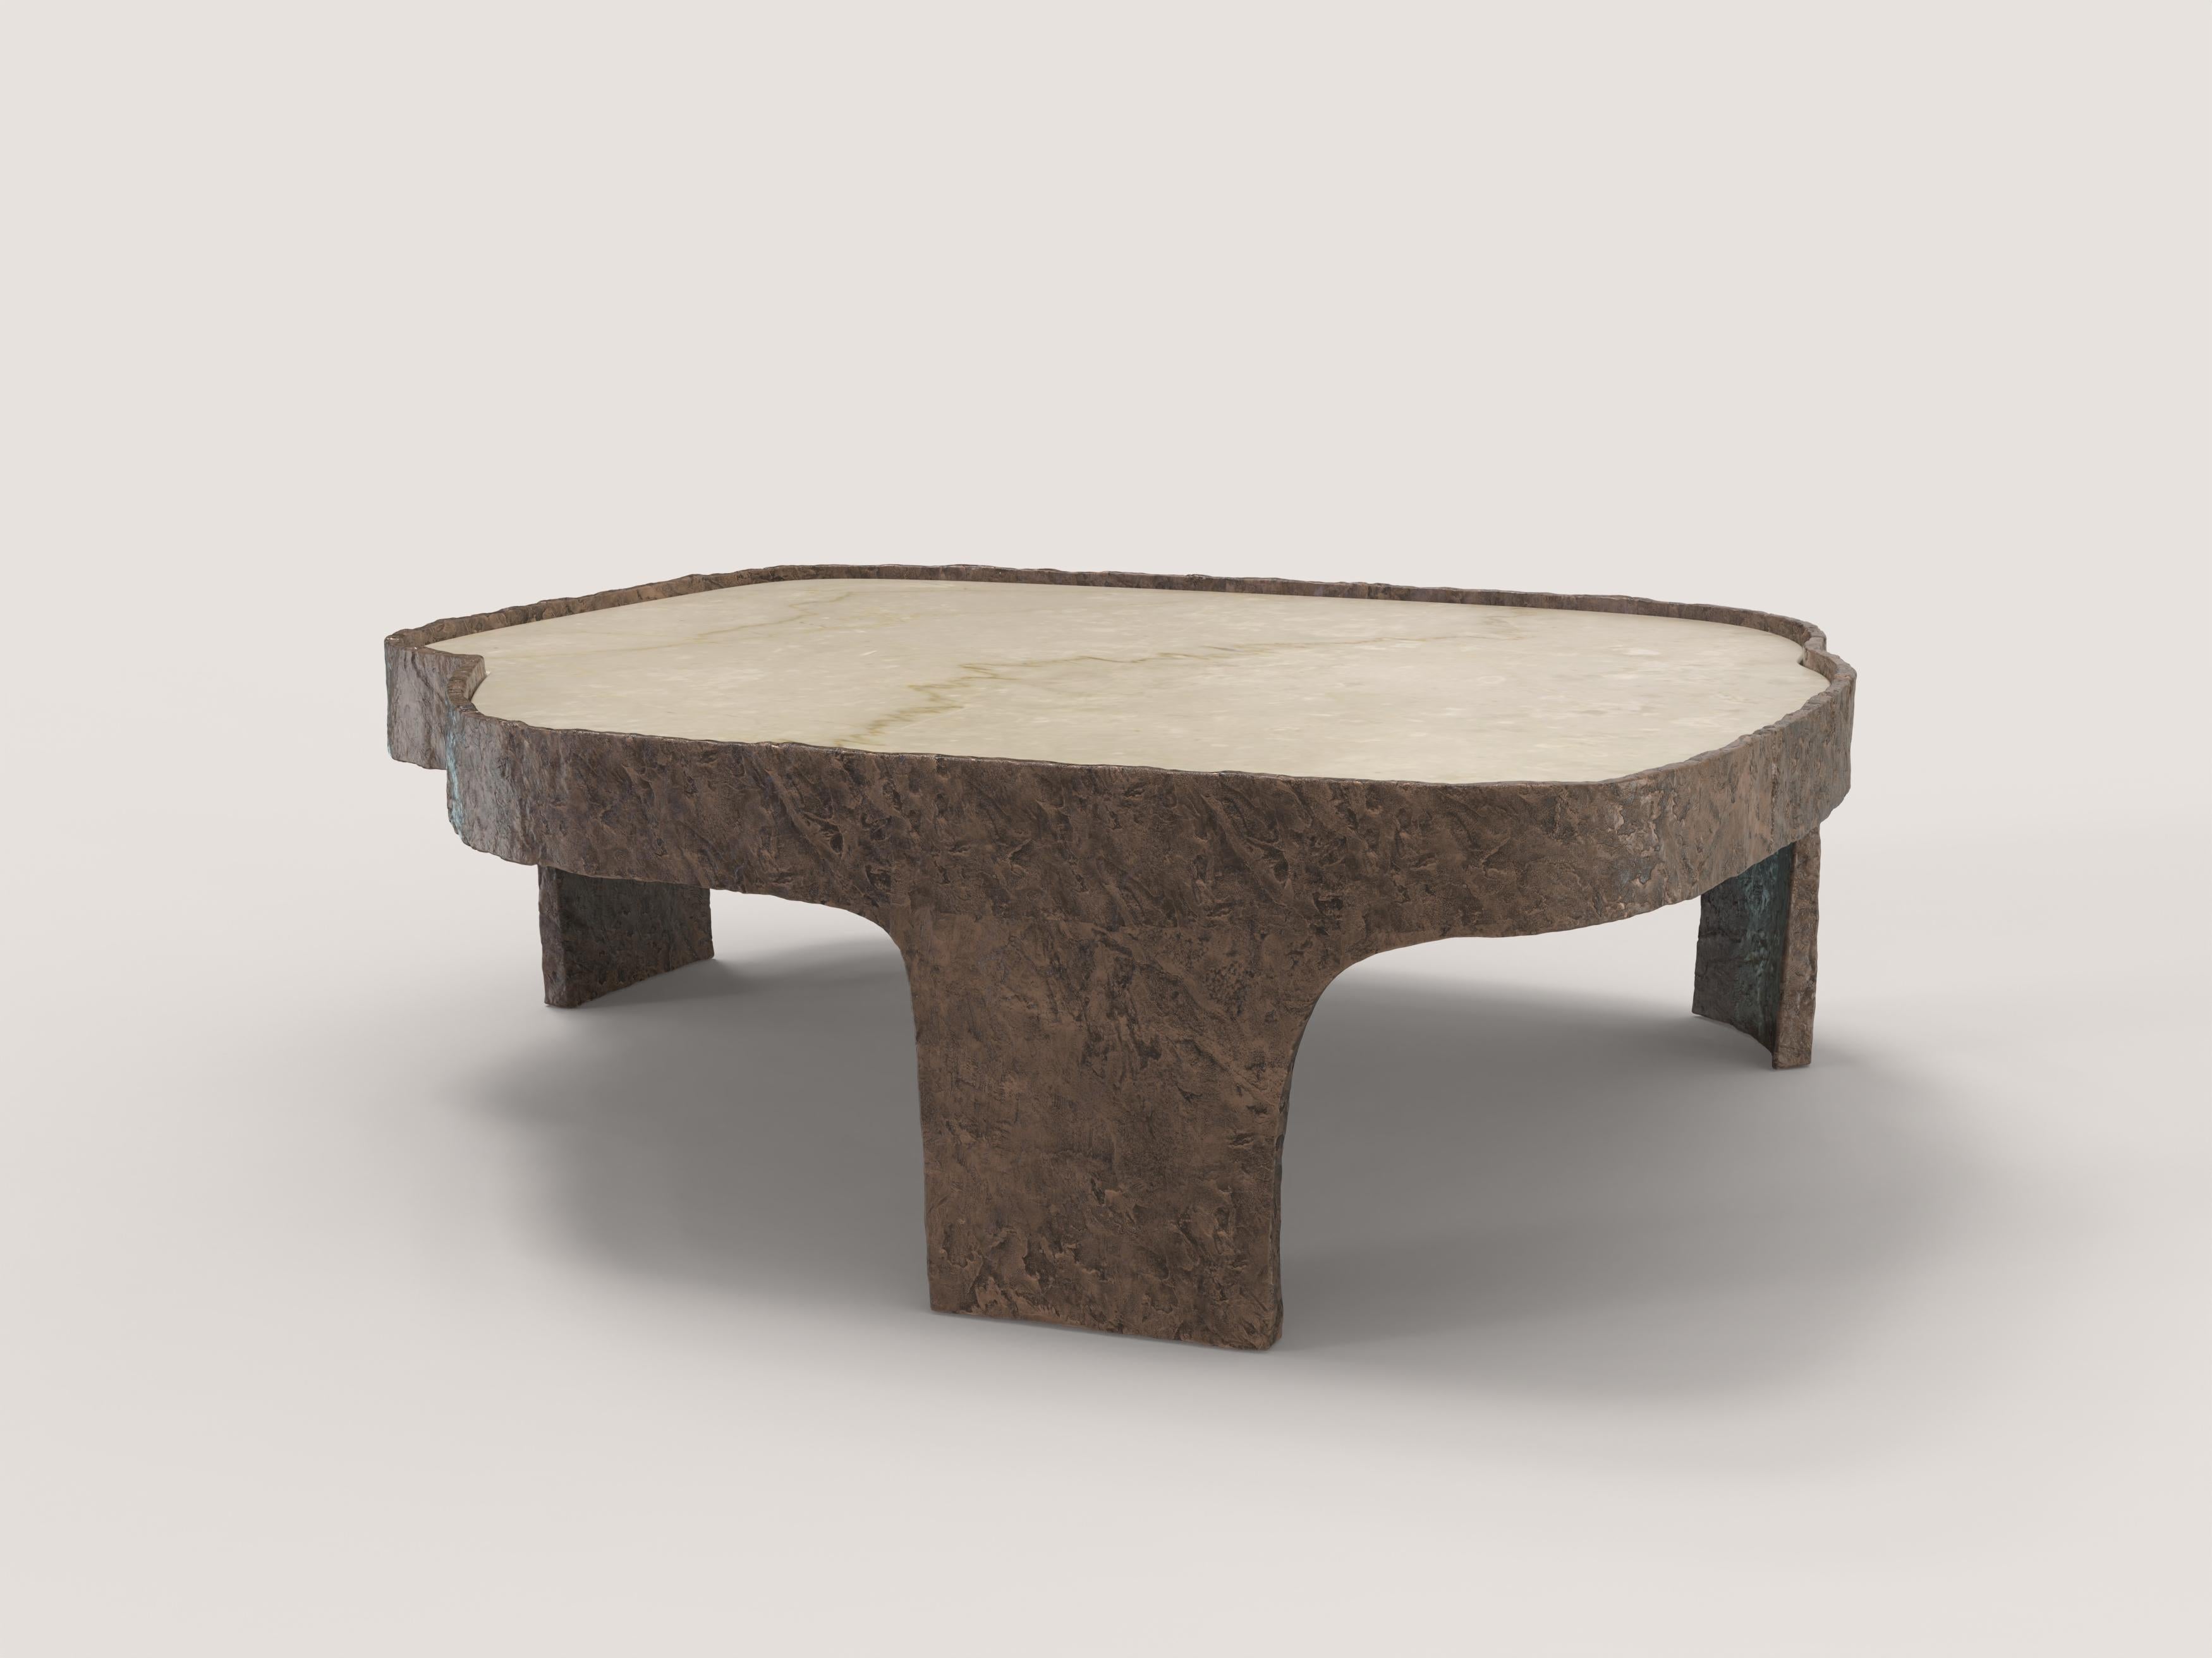 Italian Limited Edition Marble Bronze Table, Sumatra V2 by Edizione Limitata For Sale